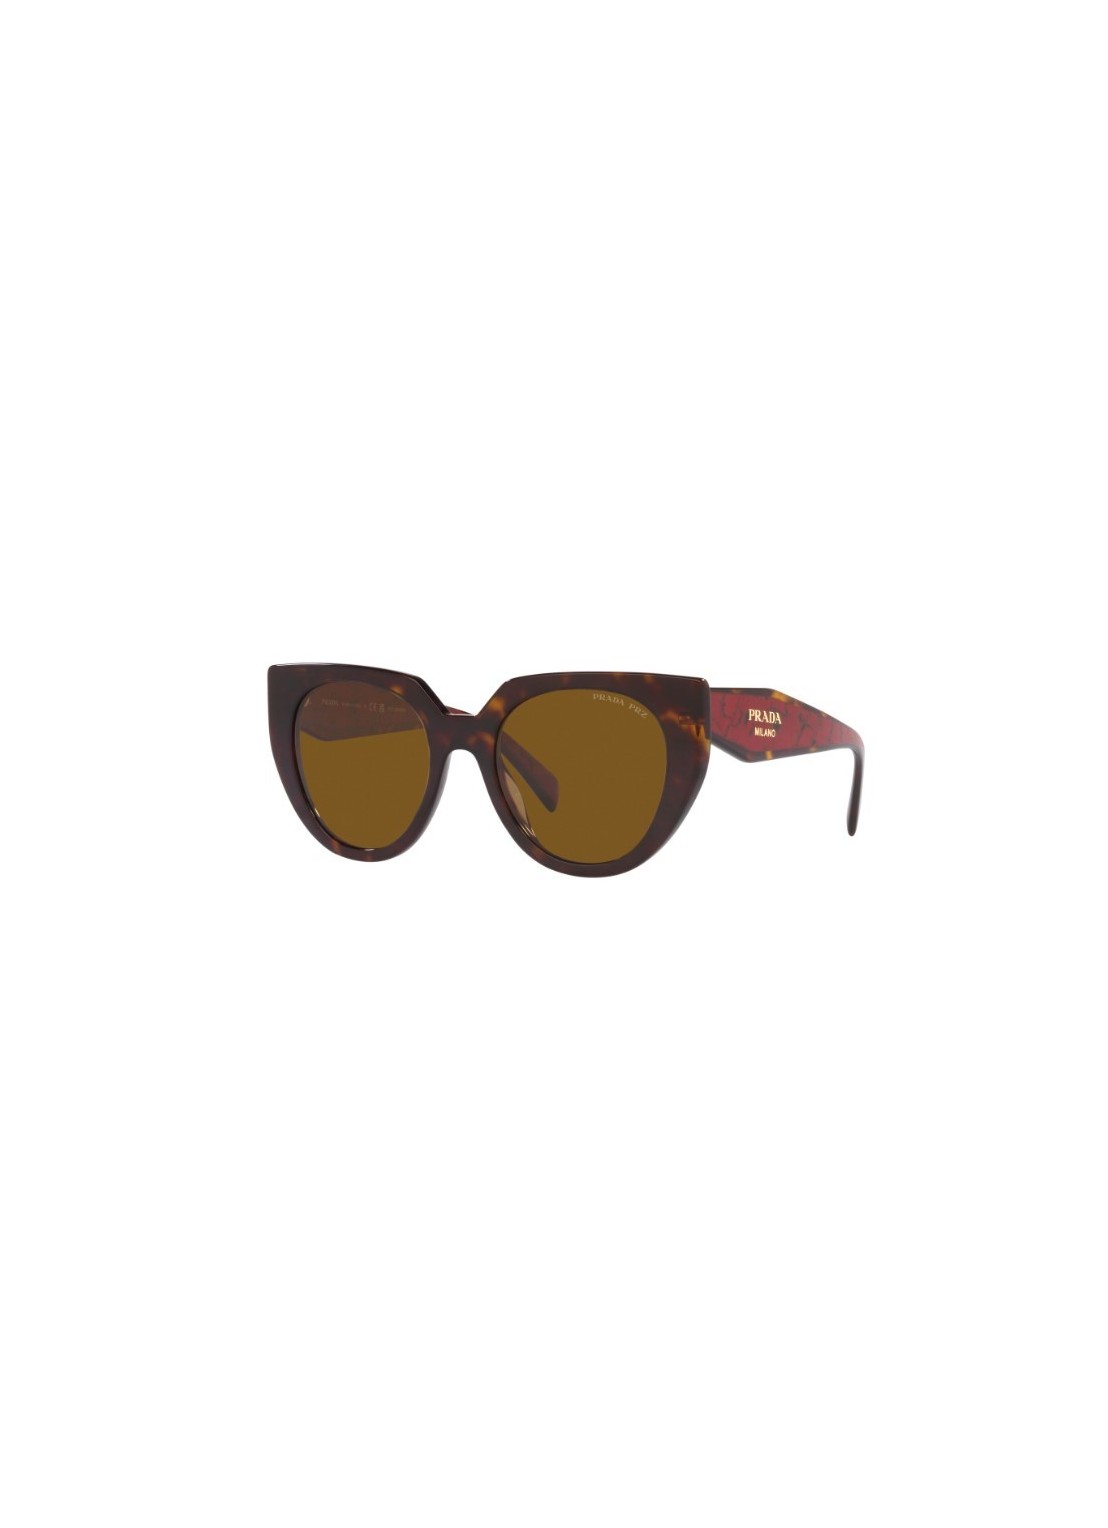 Gafas prada sunglasses woman 0pr14ws 0pr14ws 2au5y1 talla transparente
 